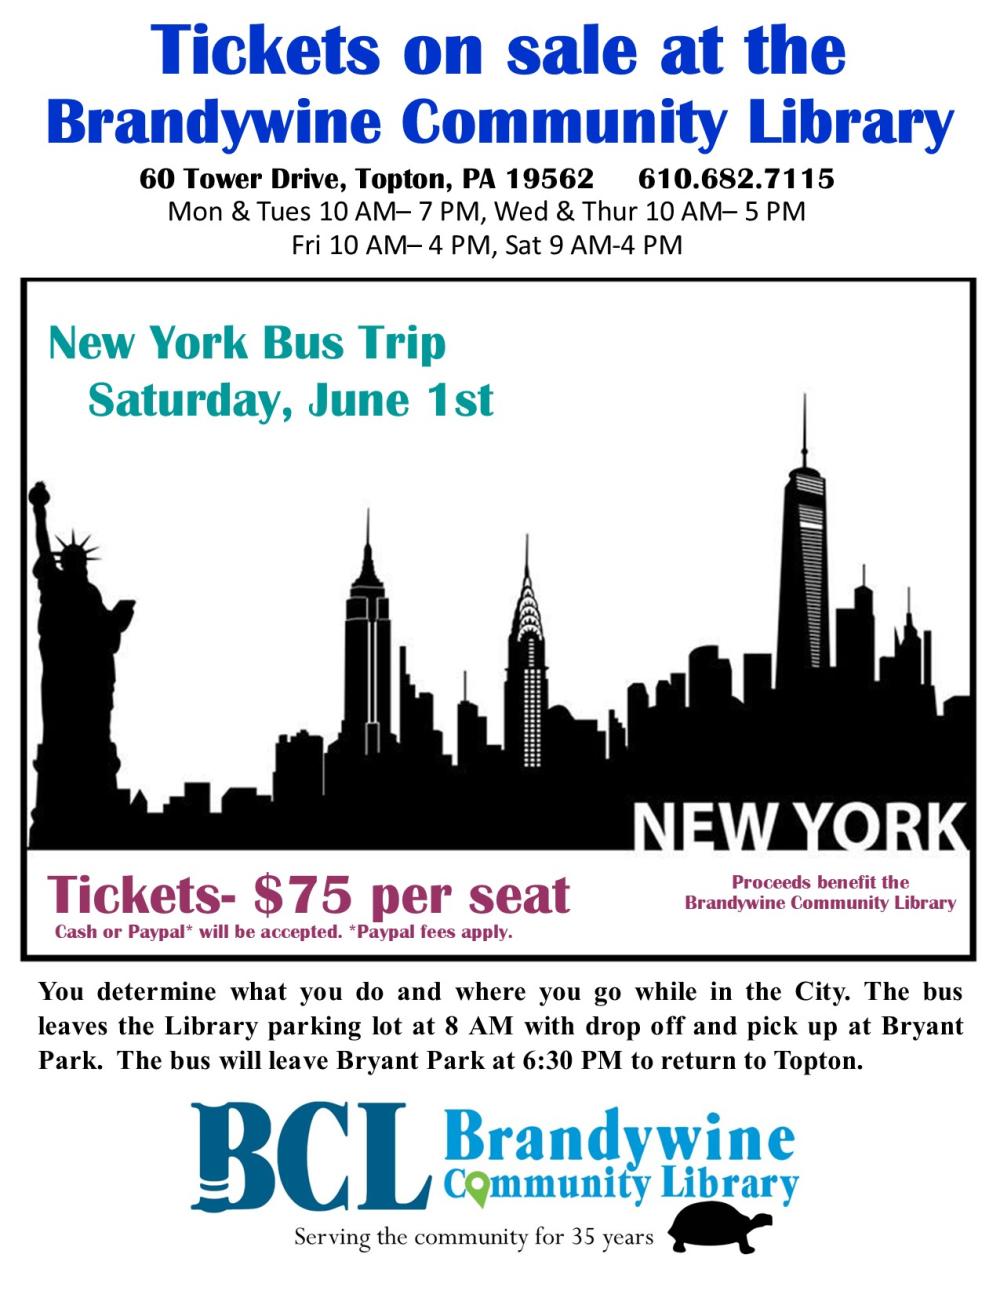 new york bus trip june 1st ticket $75